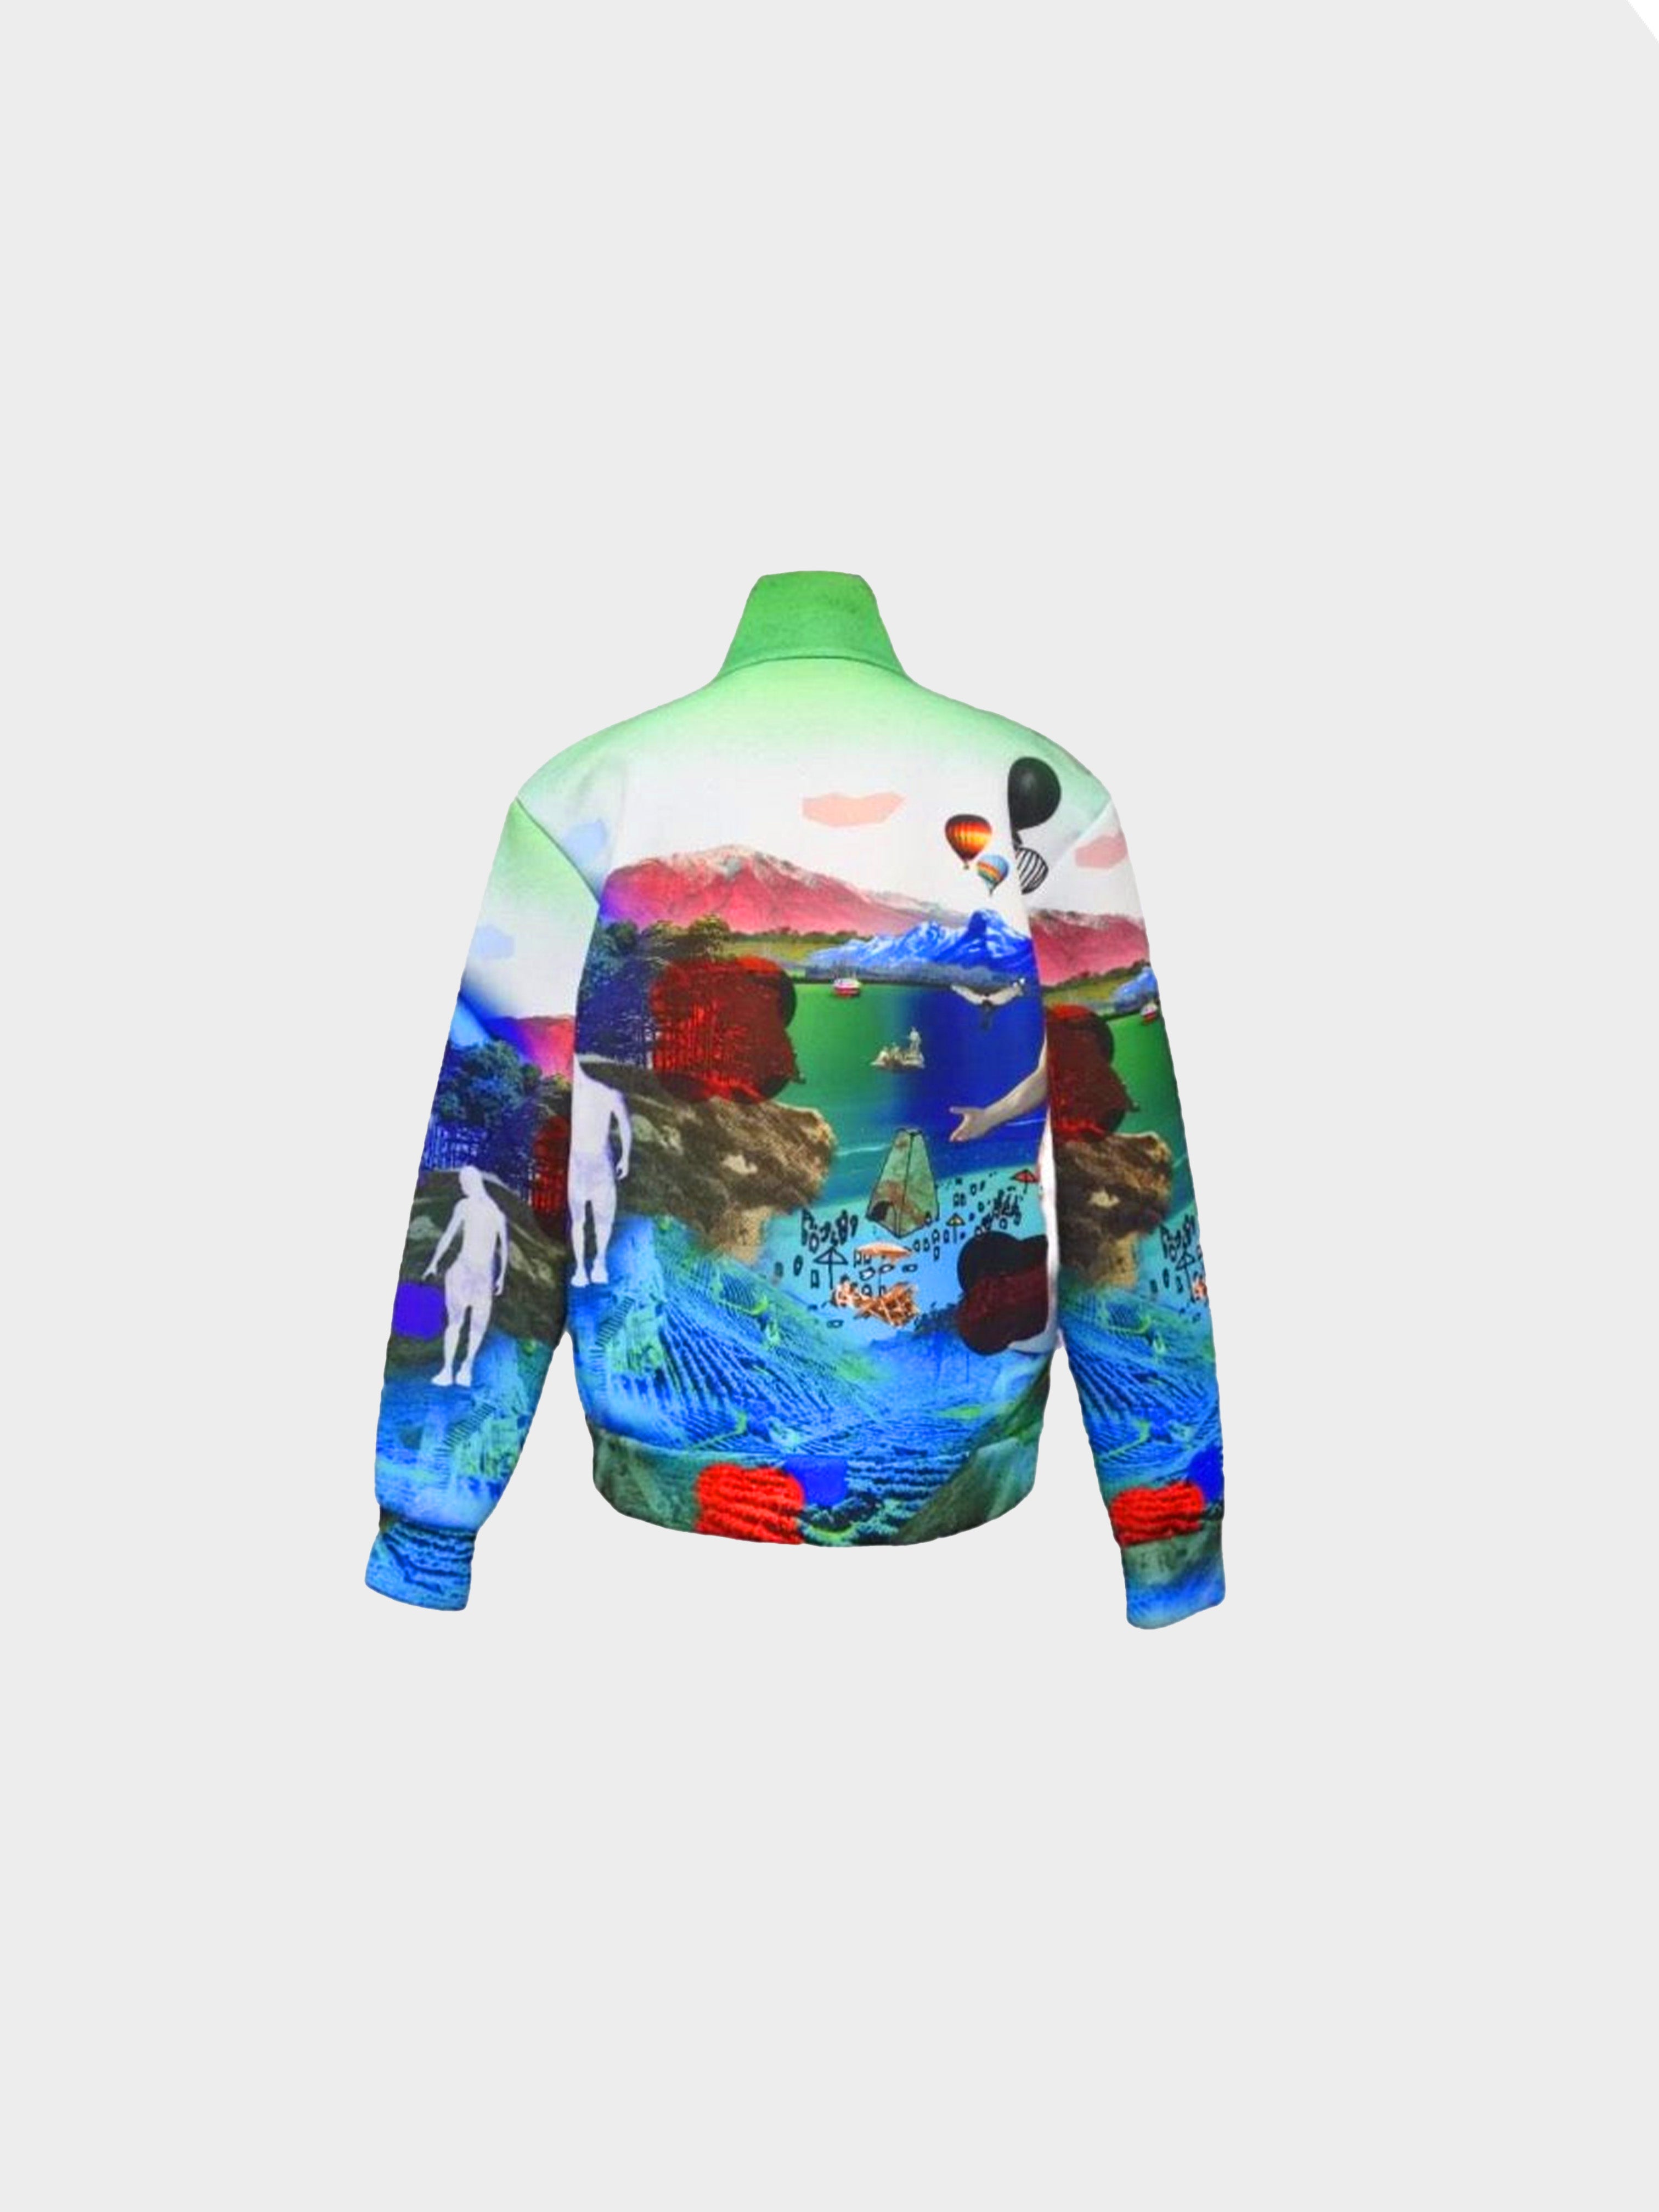 Prada SS 2019 Psychedelic Multicolor Bomber Jacket